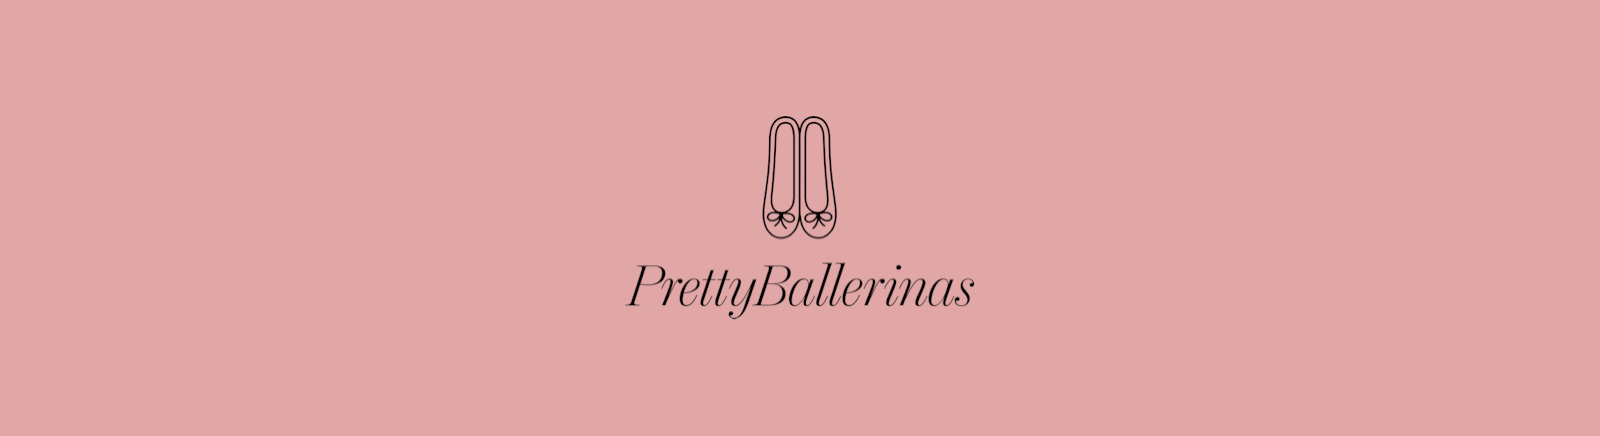 Modische Pretty Ballerinas Schuhe bestellen | Juppen